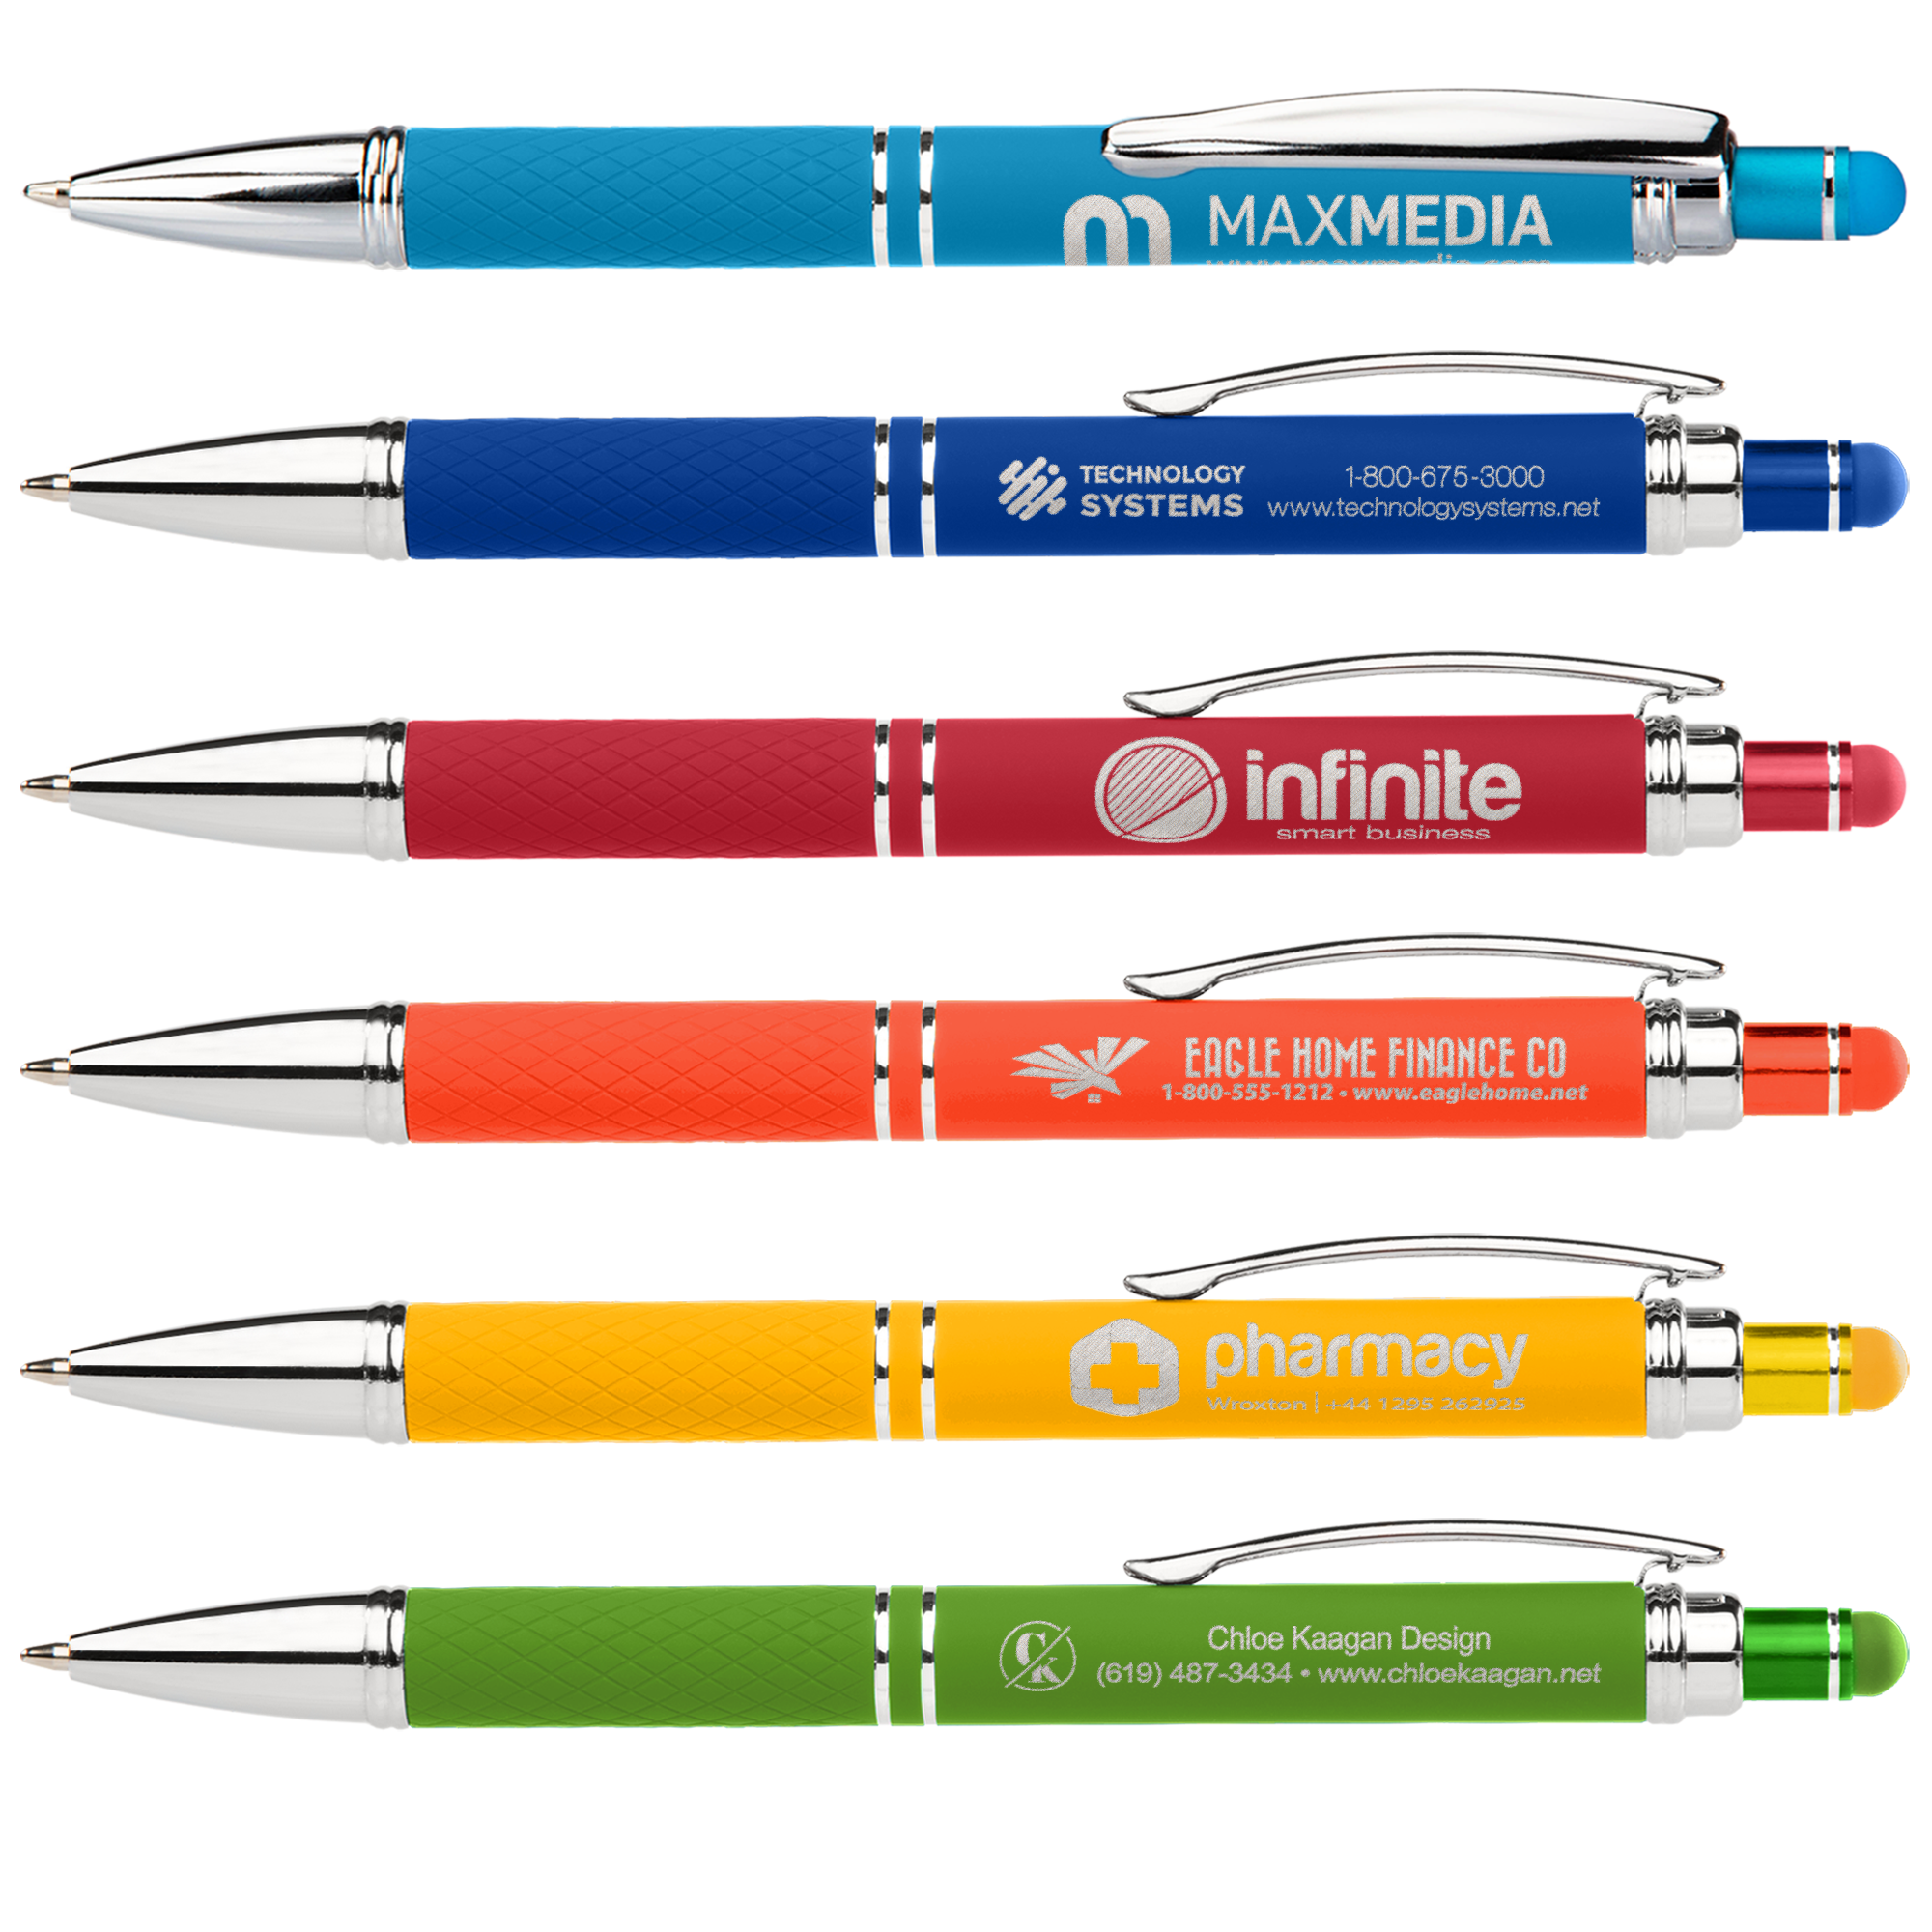 Promotional Pens: Top Picks for Effective Branding - Dayspring Pens